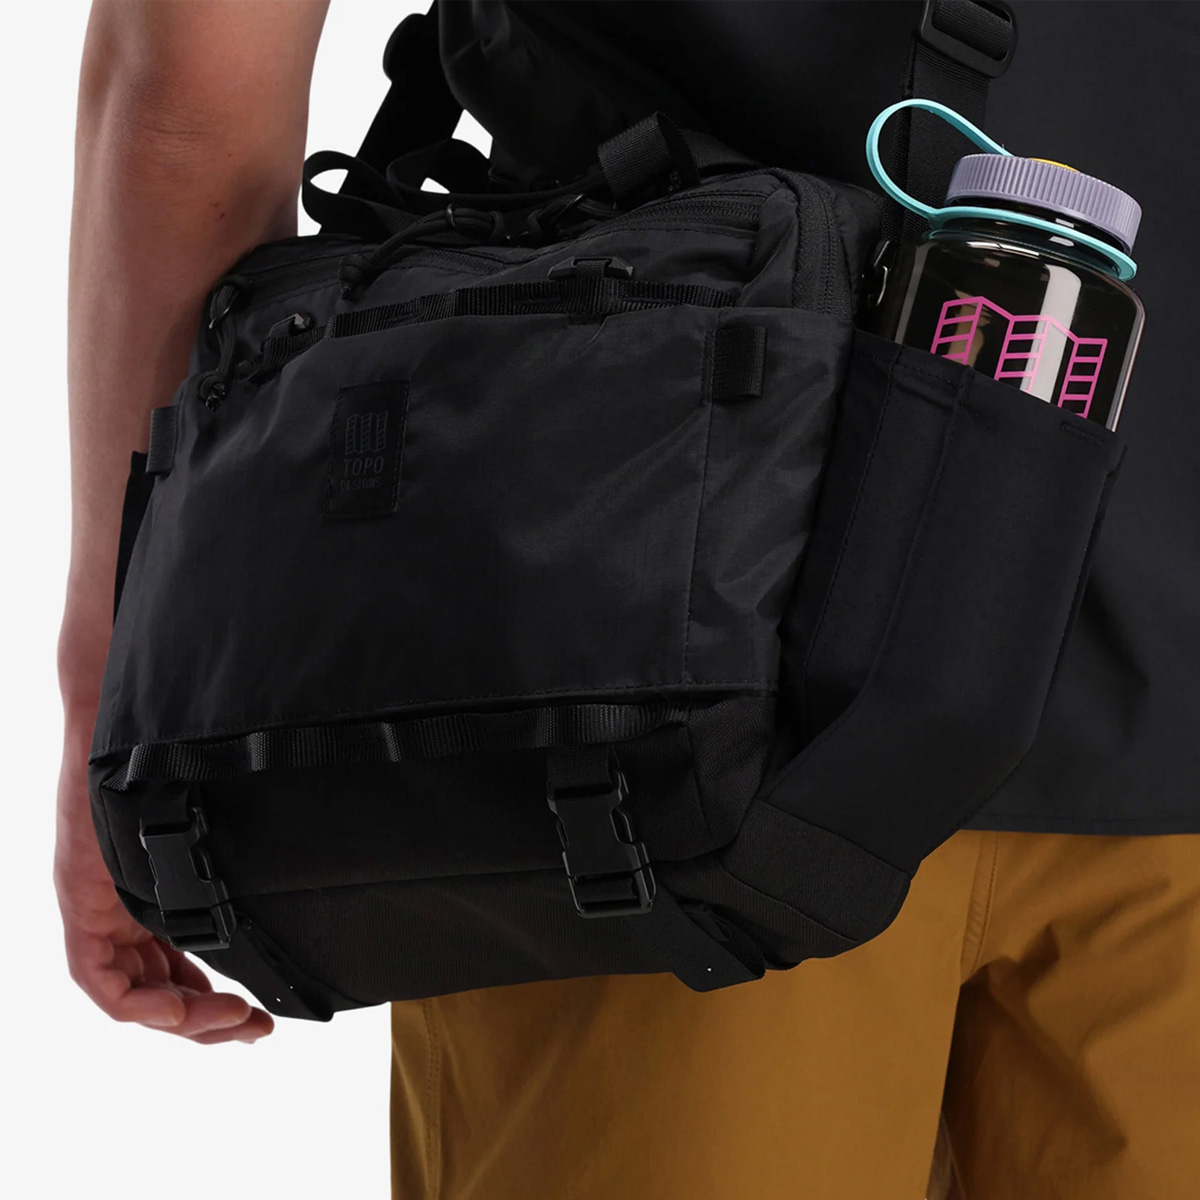 Topo Designs Mountain Cross Bag Black, side pockets fit sized water bottles